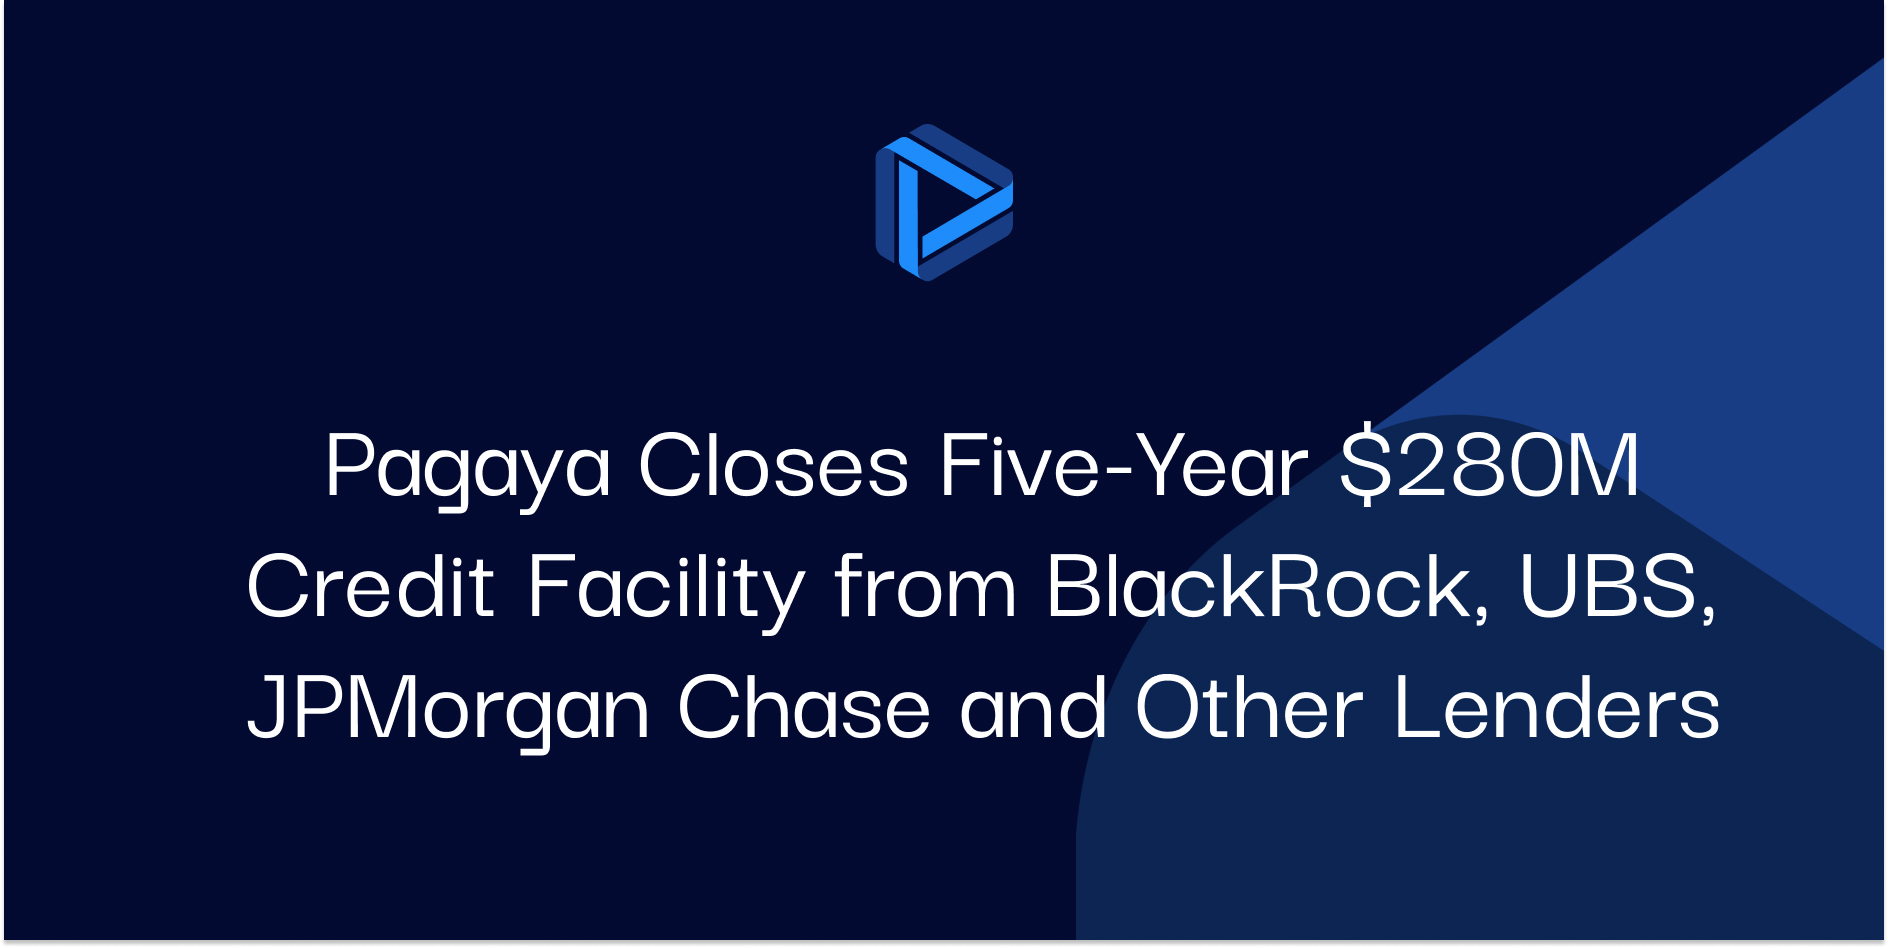 Pagaya Closes Five-Year $280M Credit Facility from BlackRock, UBS, JPMorgan Chase and Other Lenders